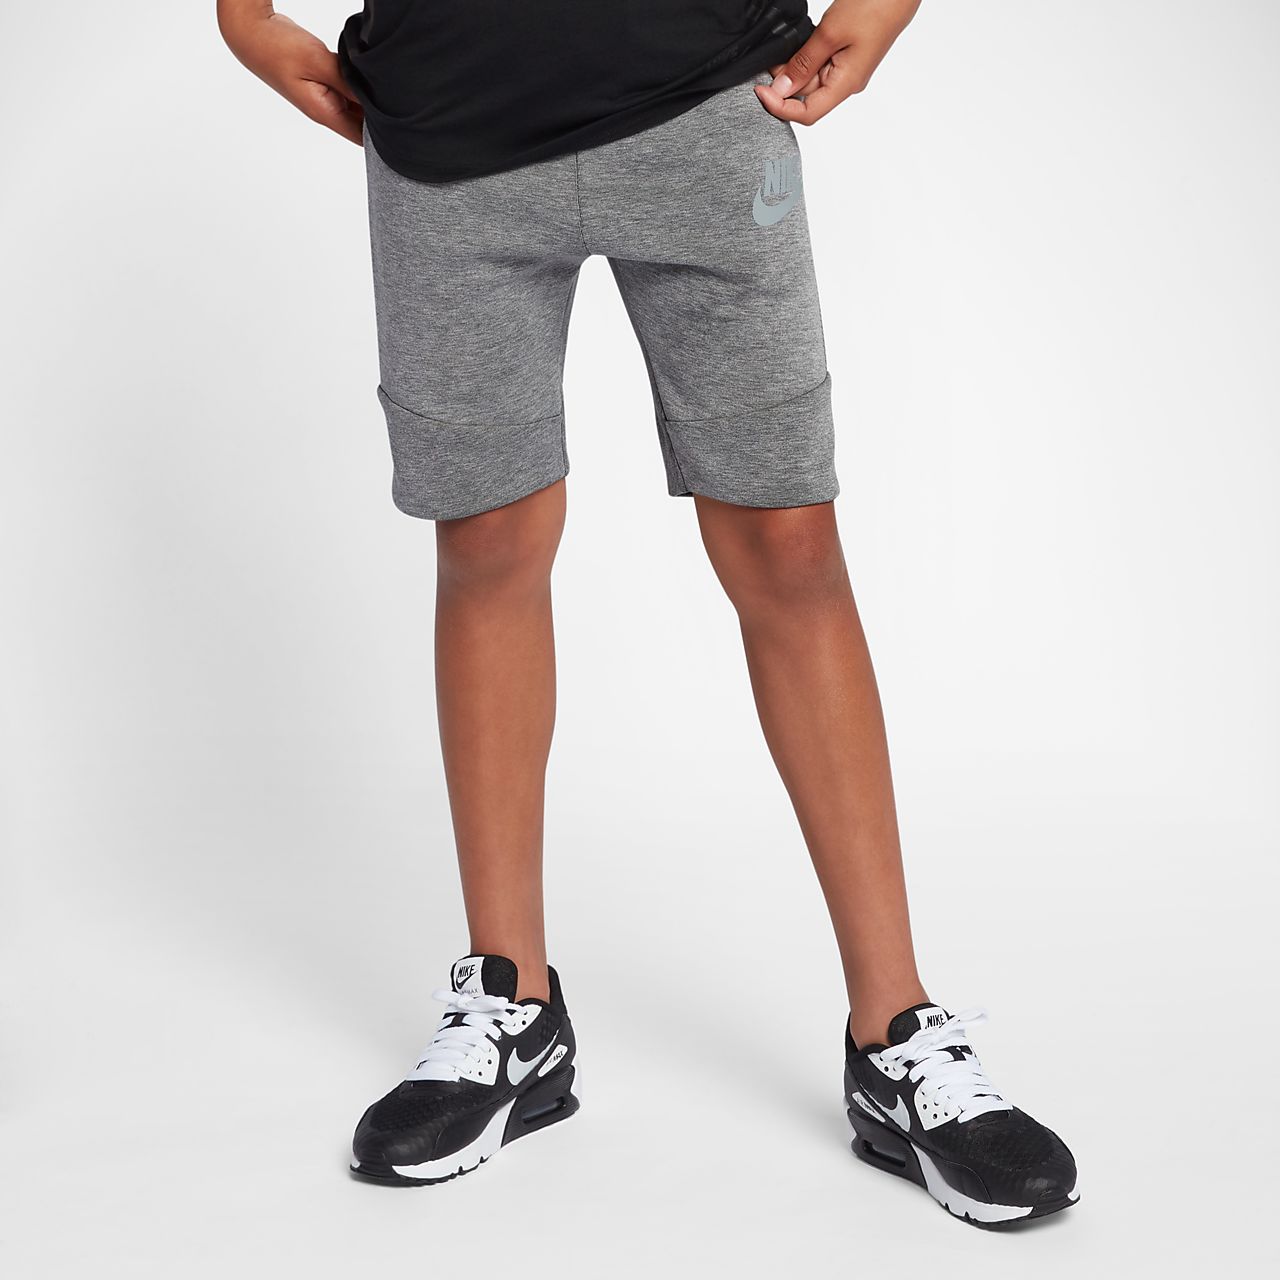 nike tech fleece shorts boys cheap online